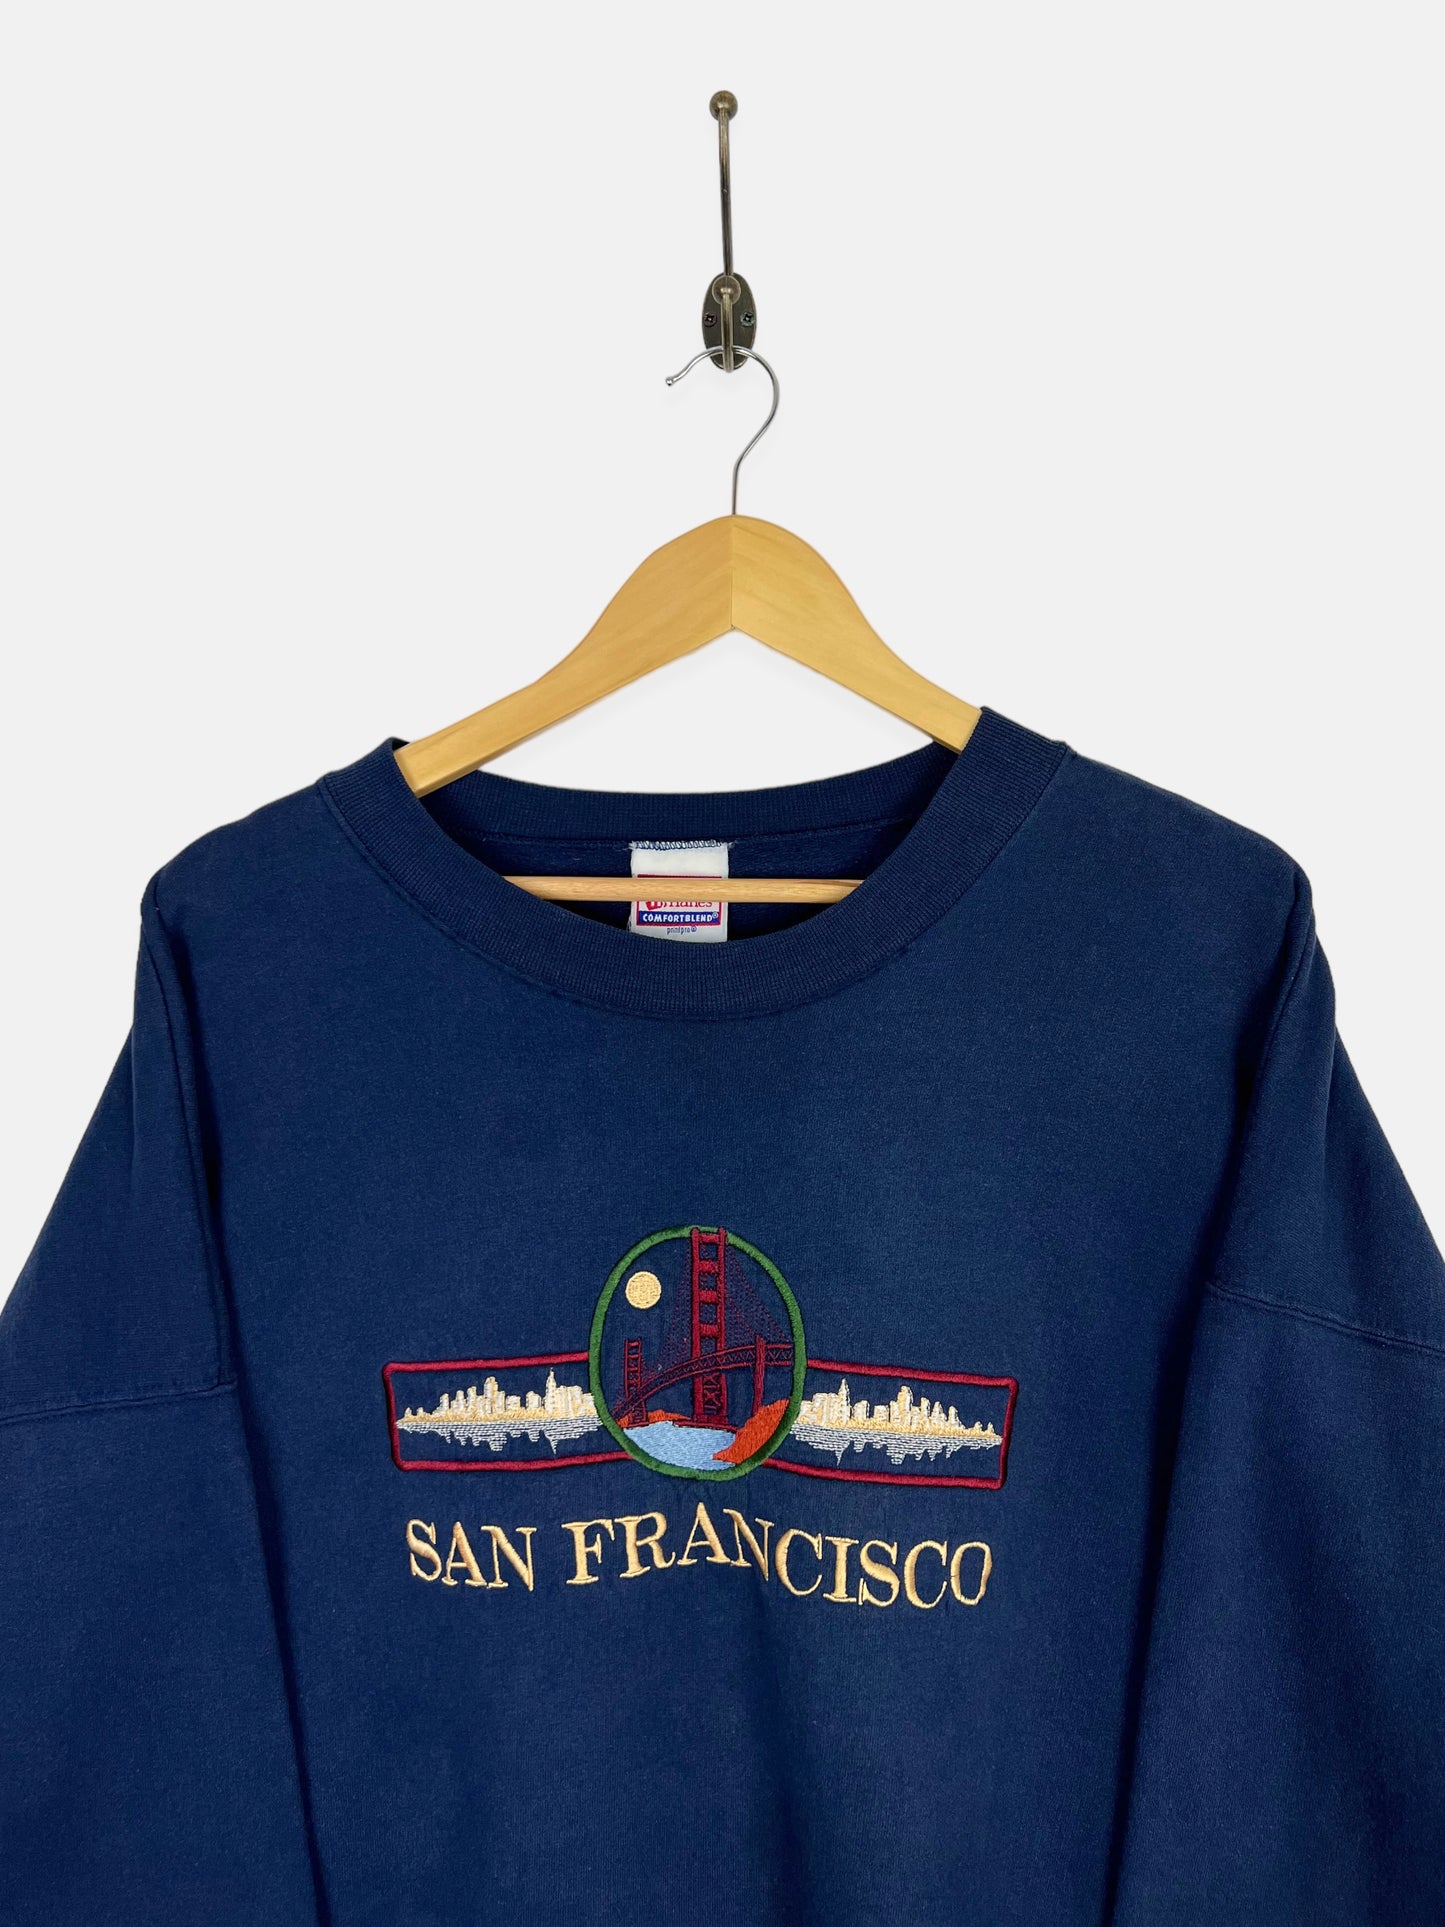 90's San Fransisco Embroidered Vintage Sweatshirt Size 2-3XL